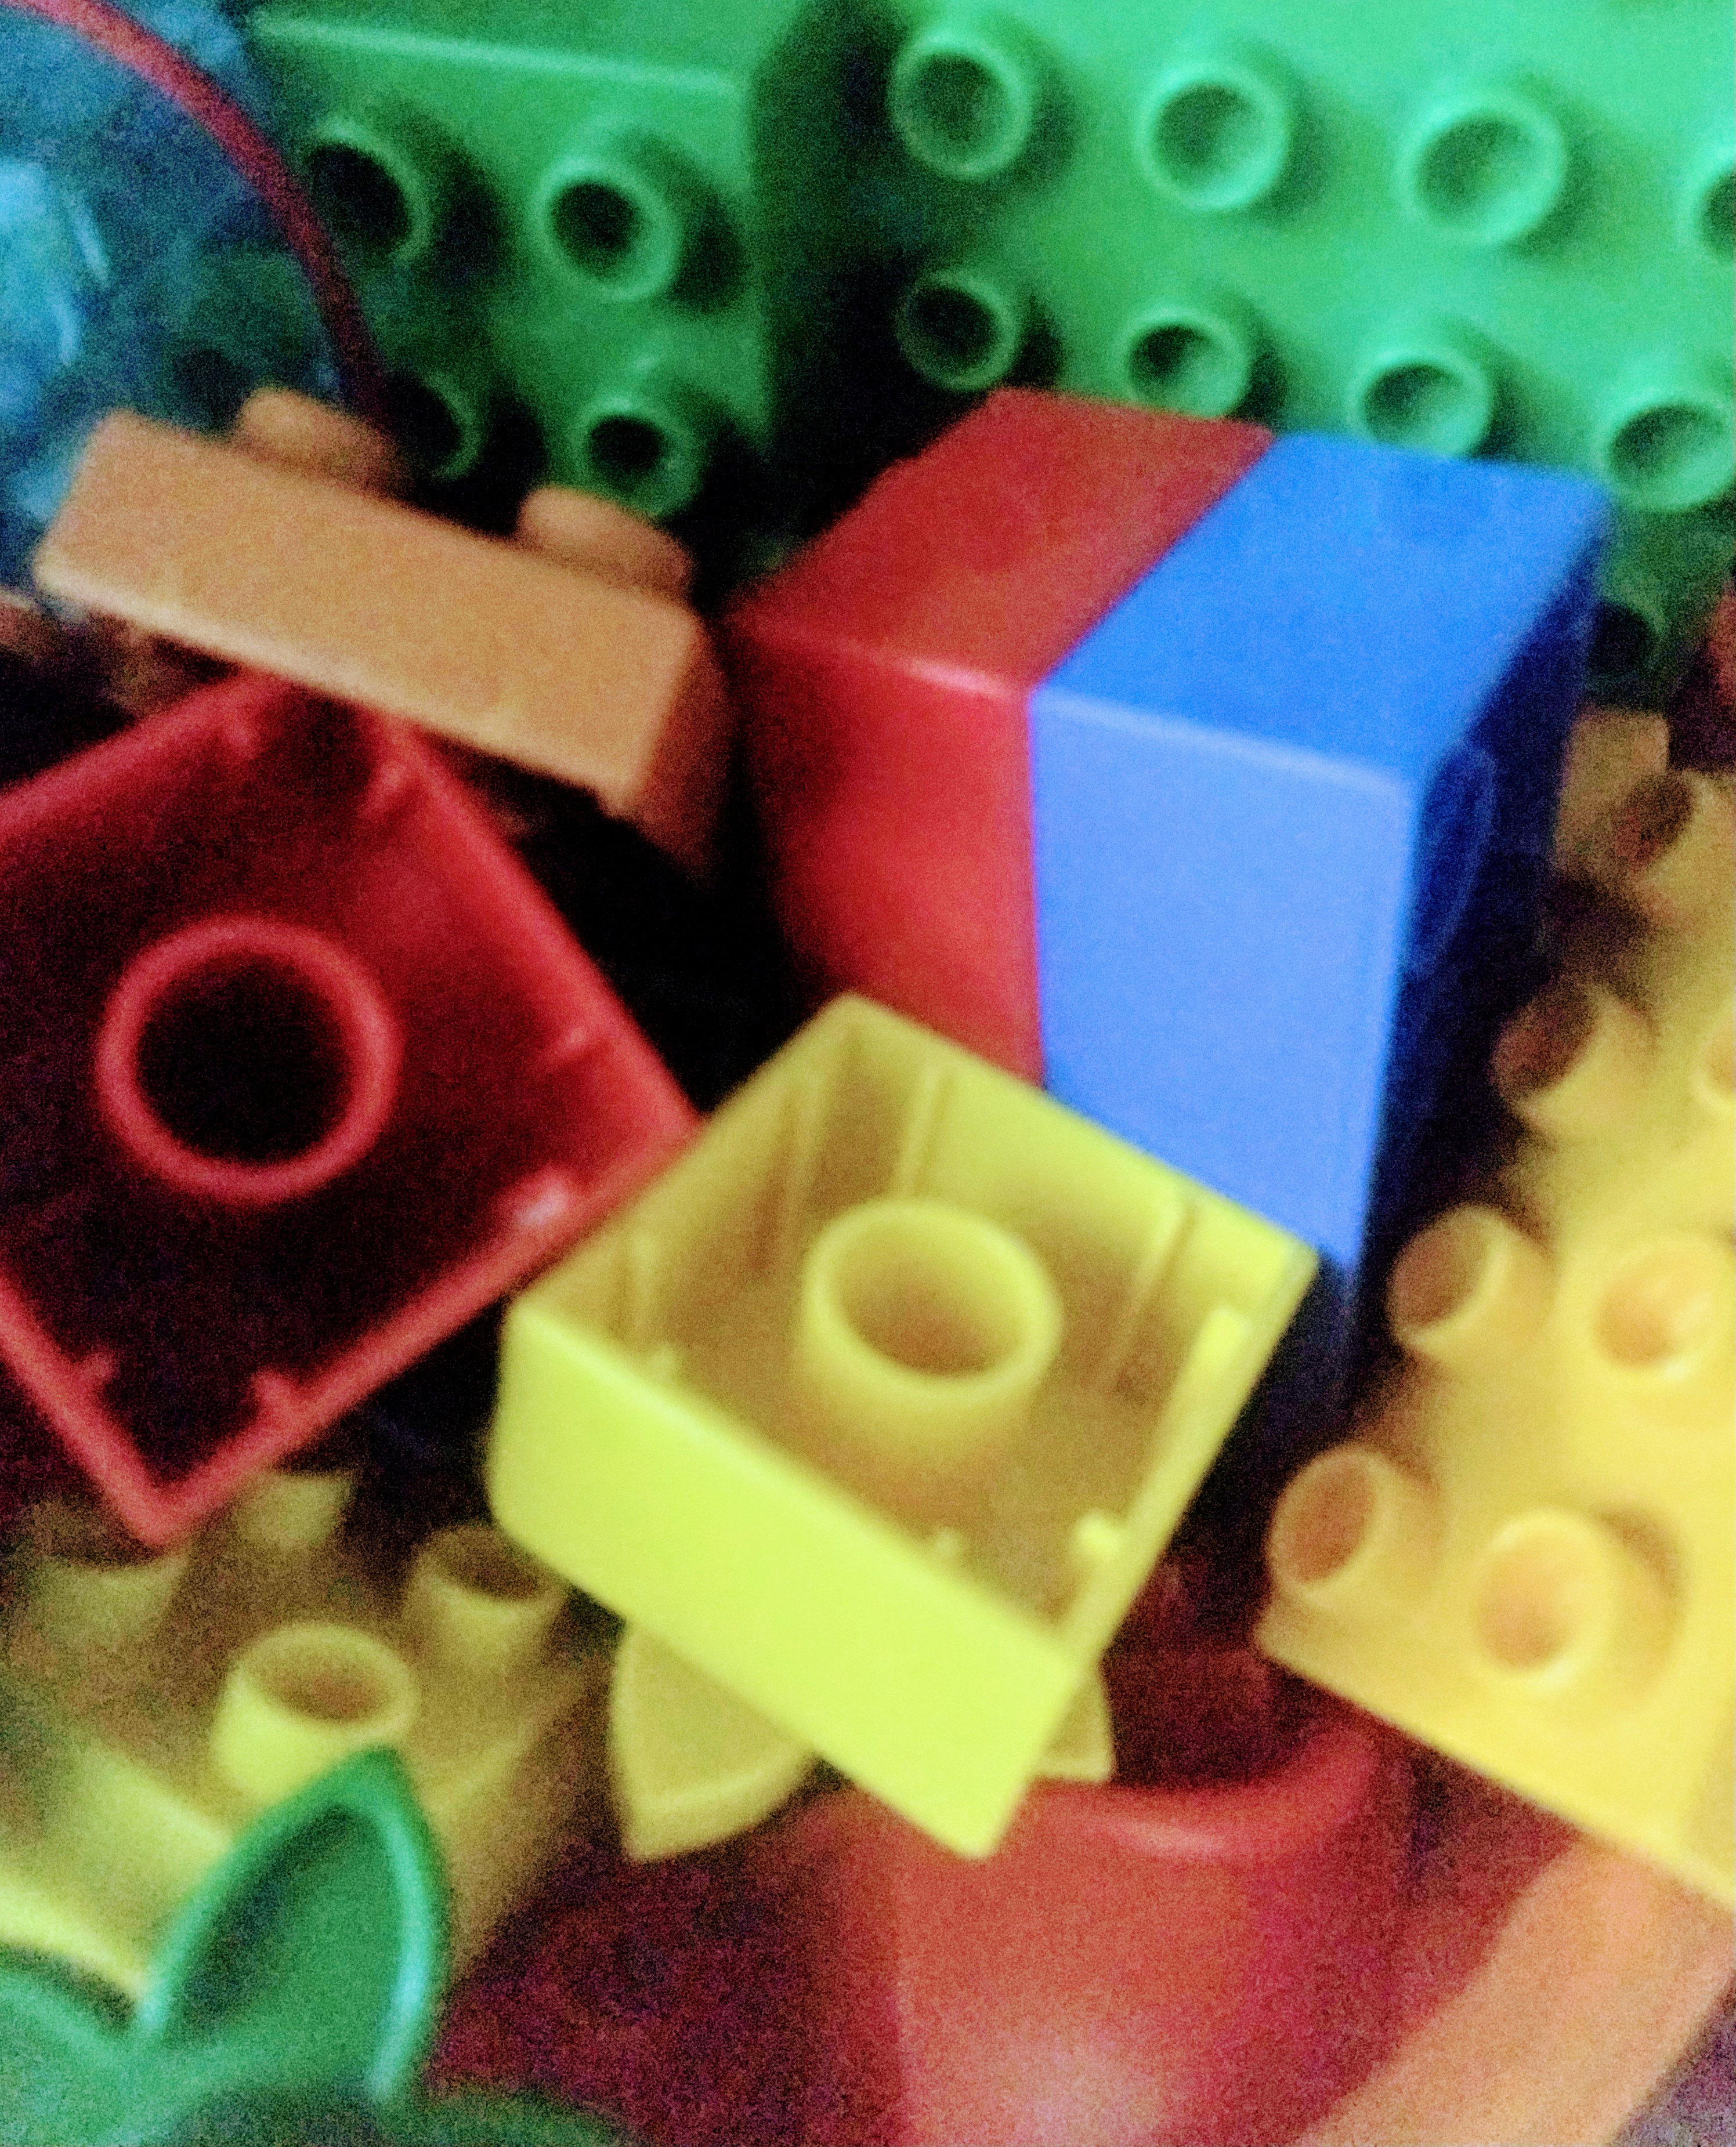 Lego, painful, kids